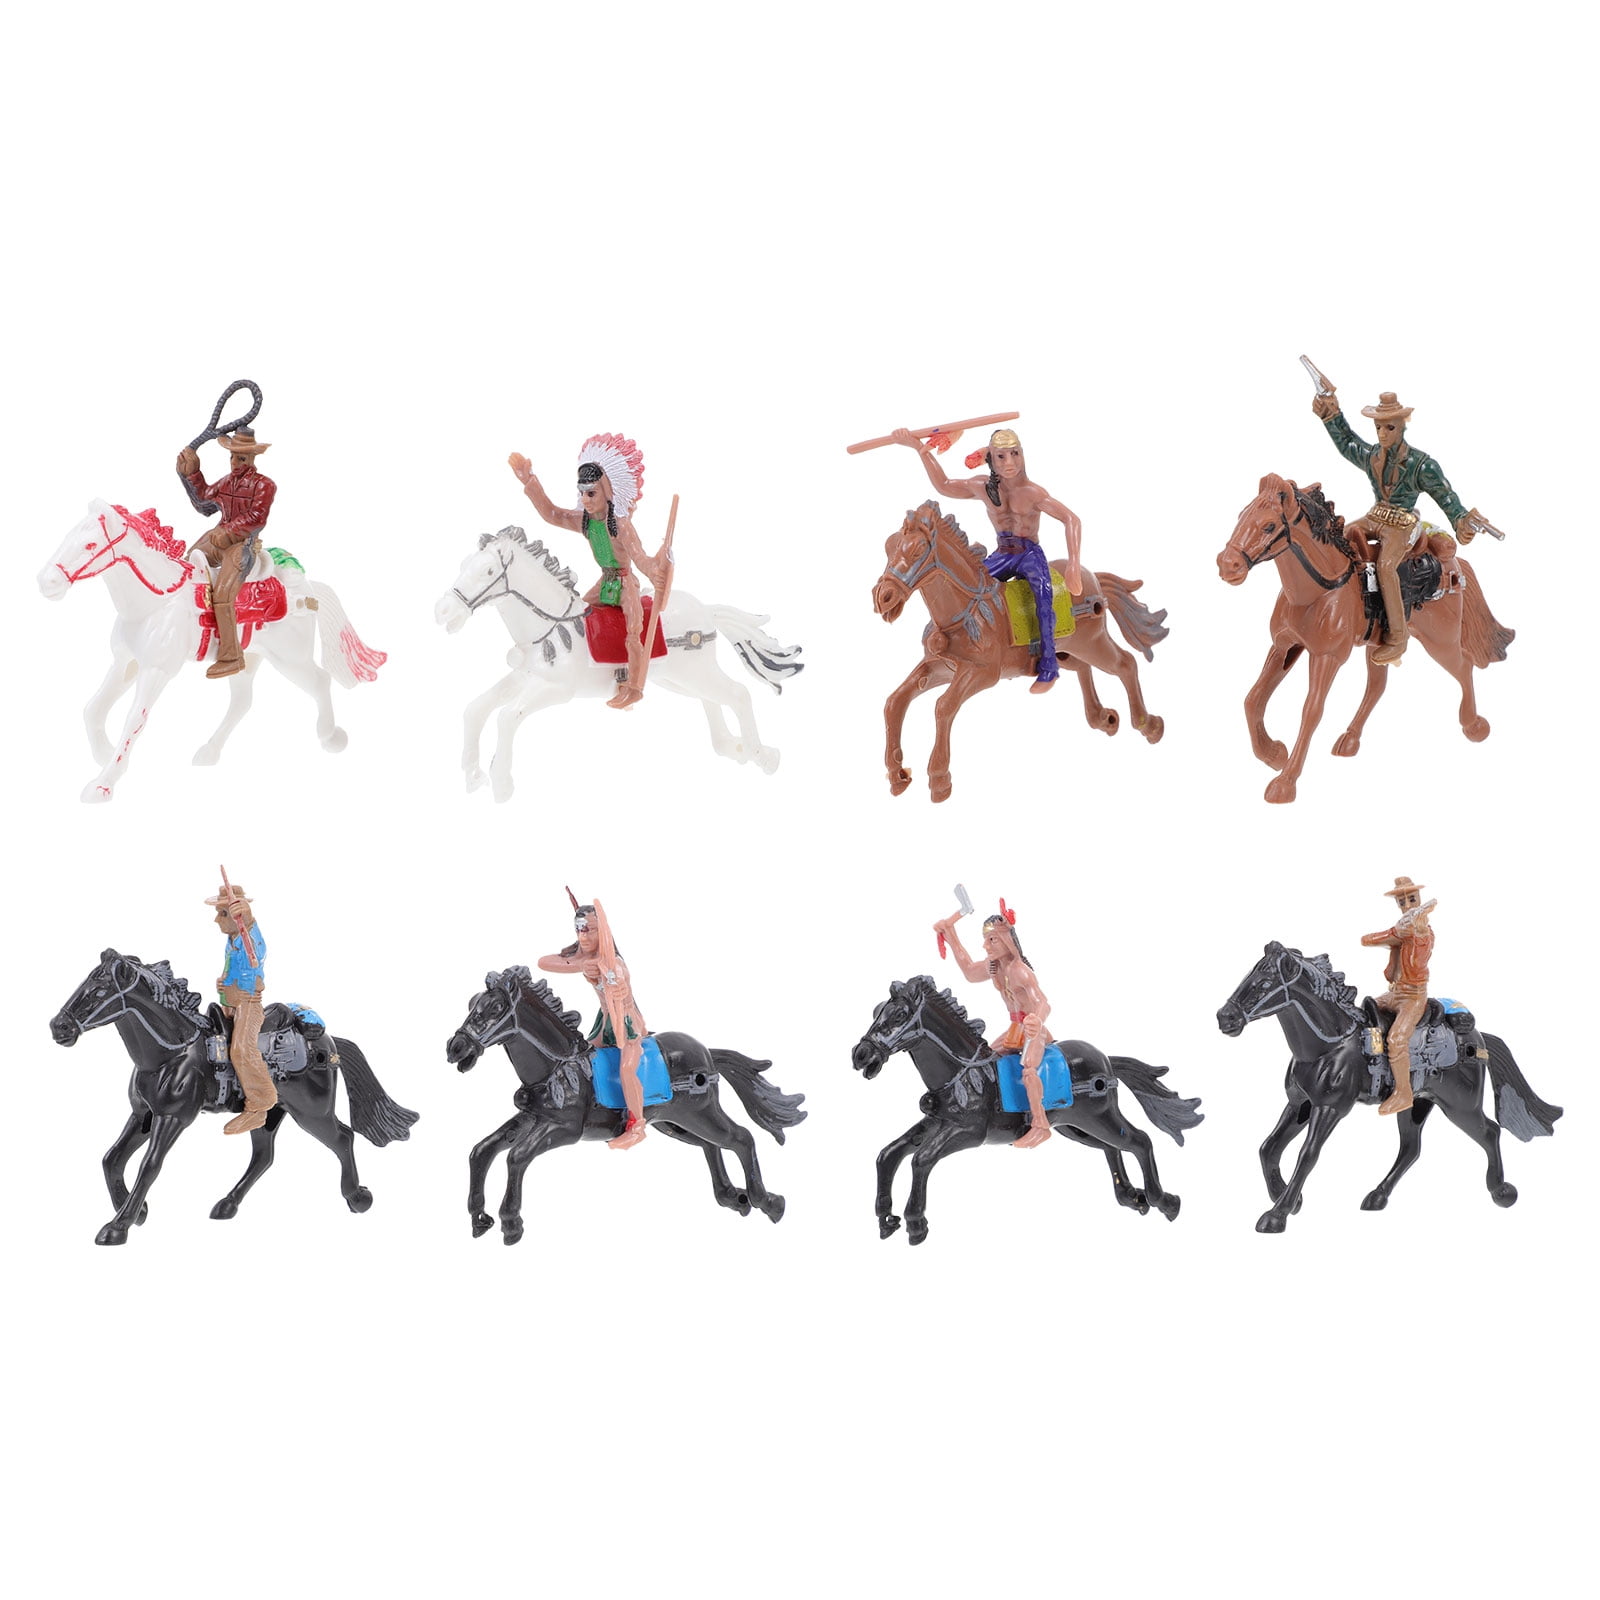 Toy 56 PCs Wild West Cowboys Indians Plastic Figures Native American Boy's Kids 